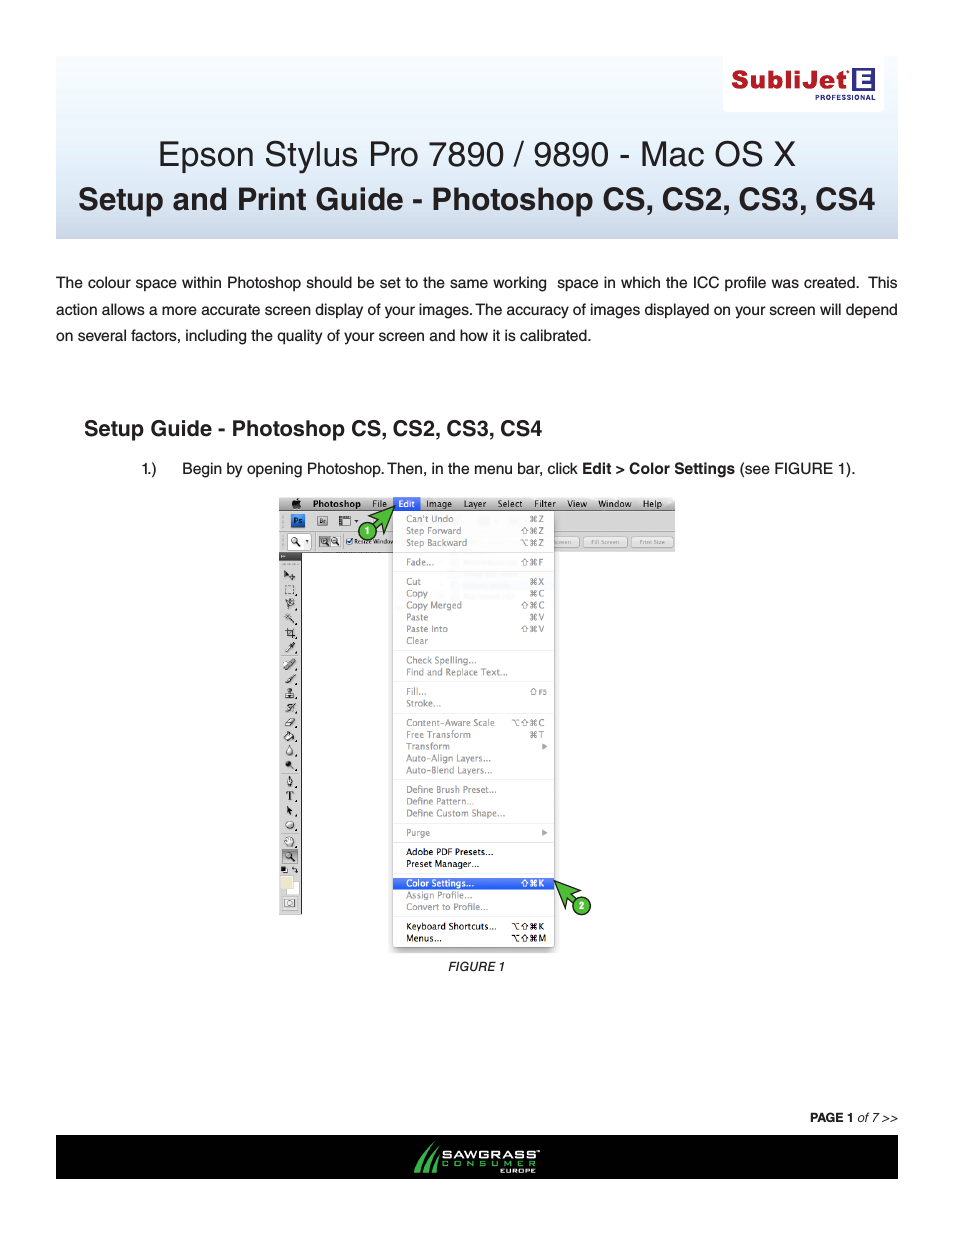 SubliJet E Epson Stylus Pro 7890 (Mac ICC Profile Setup): Print & Setup Guide Photoshop CS - CS4